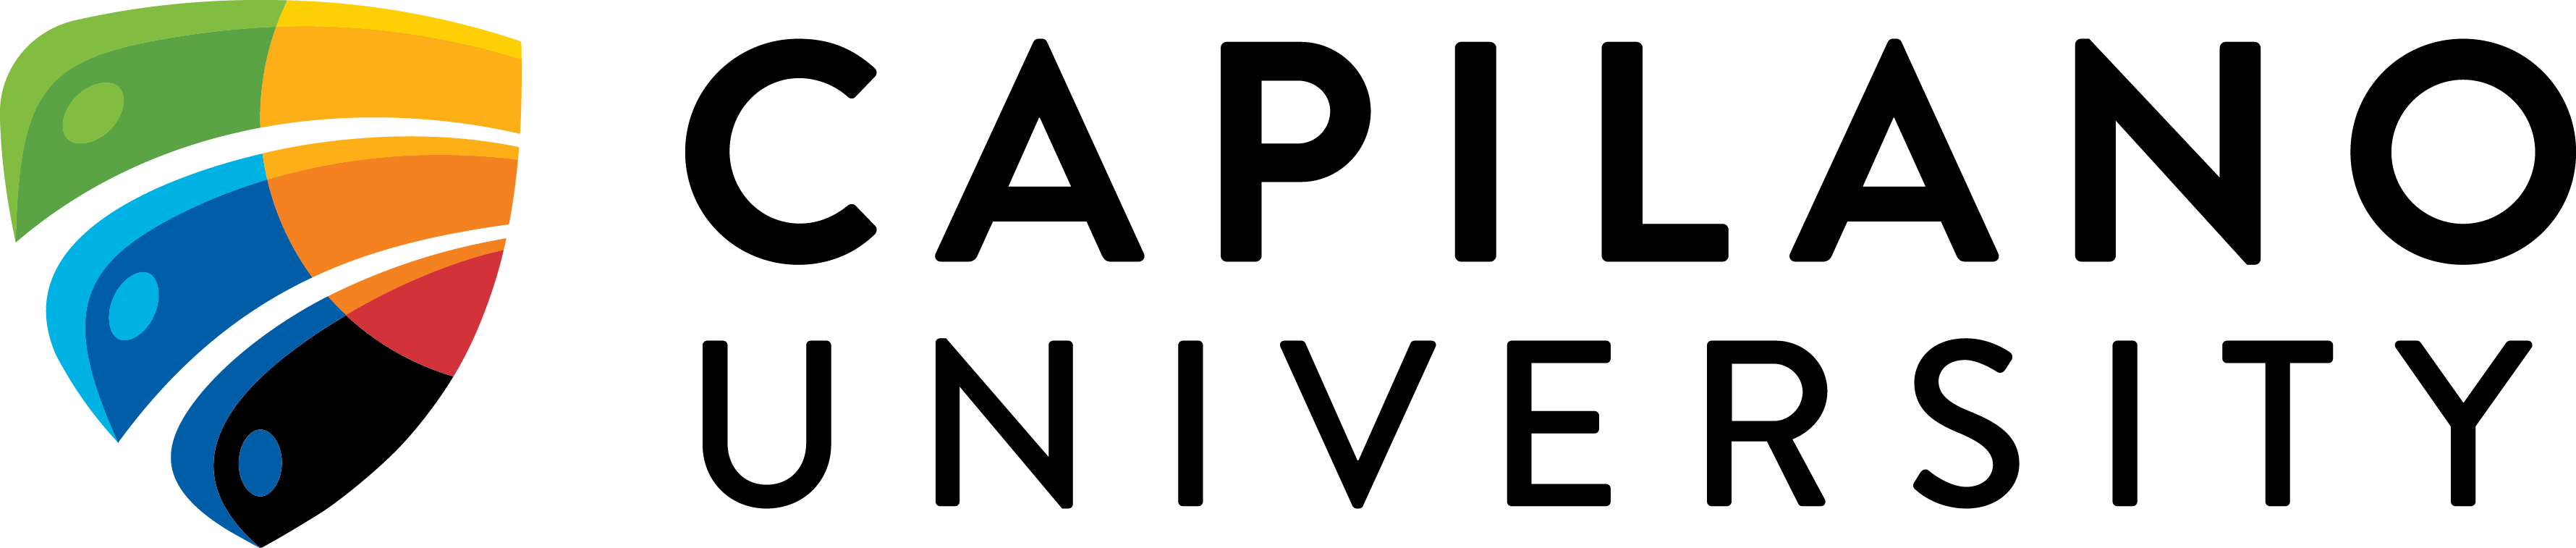 Capilano University CDC logo